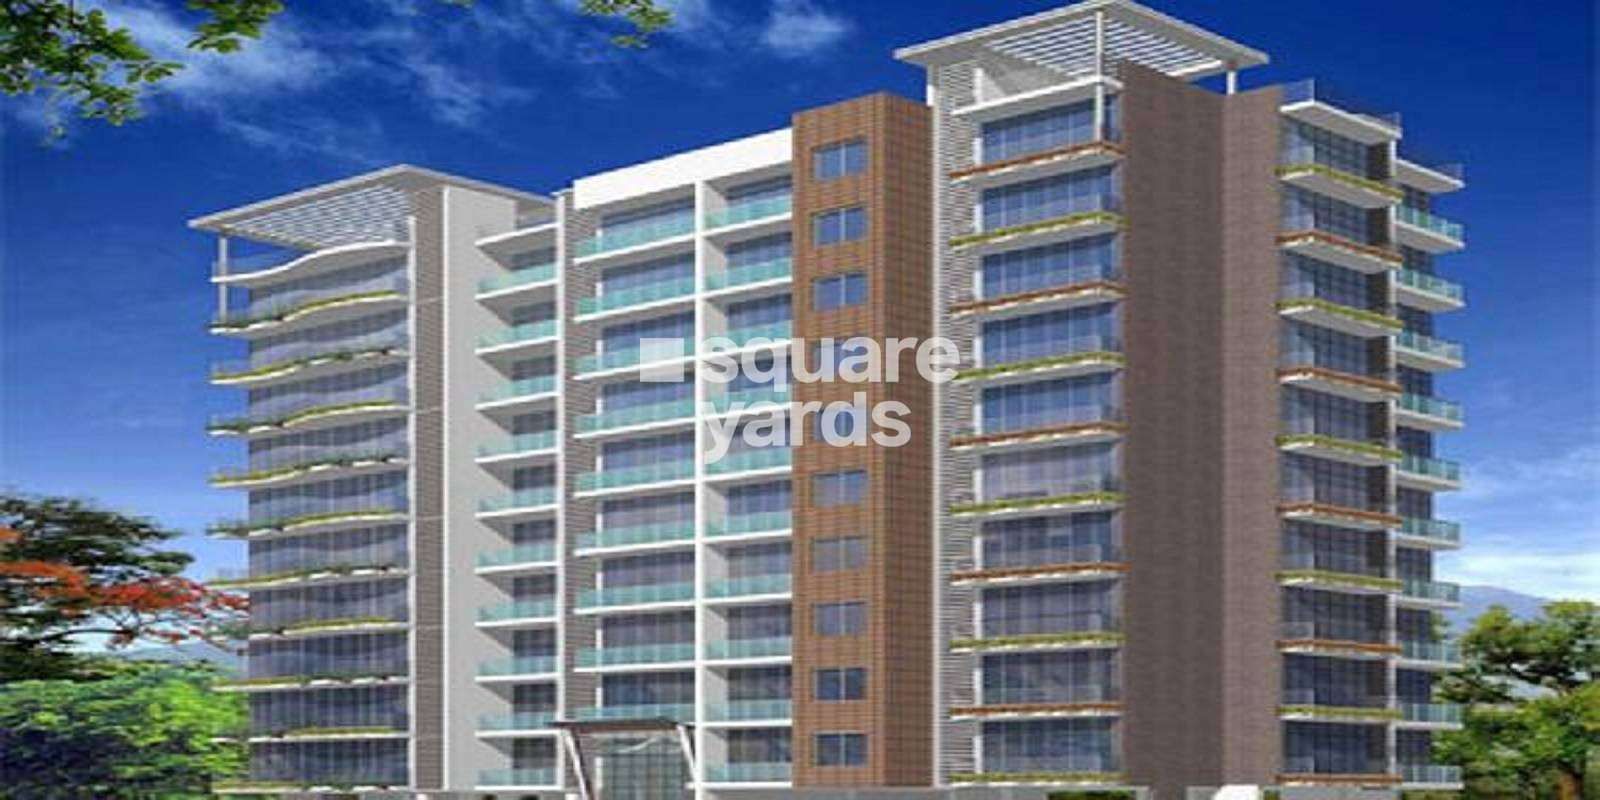 Bholenath Manit Apartments Cover Image